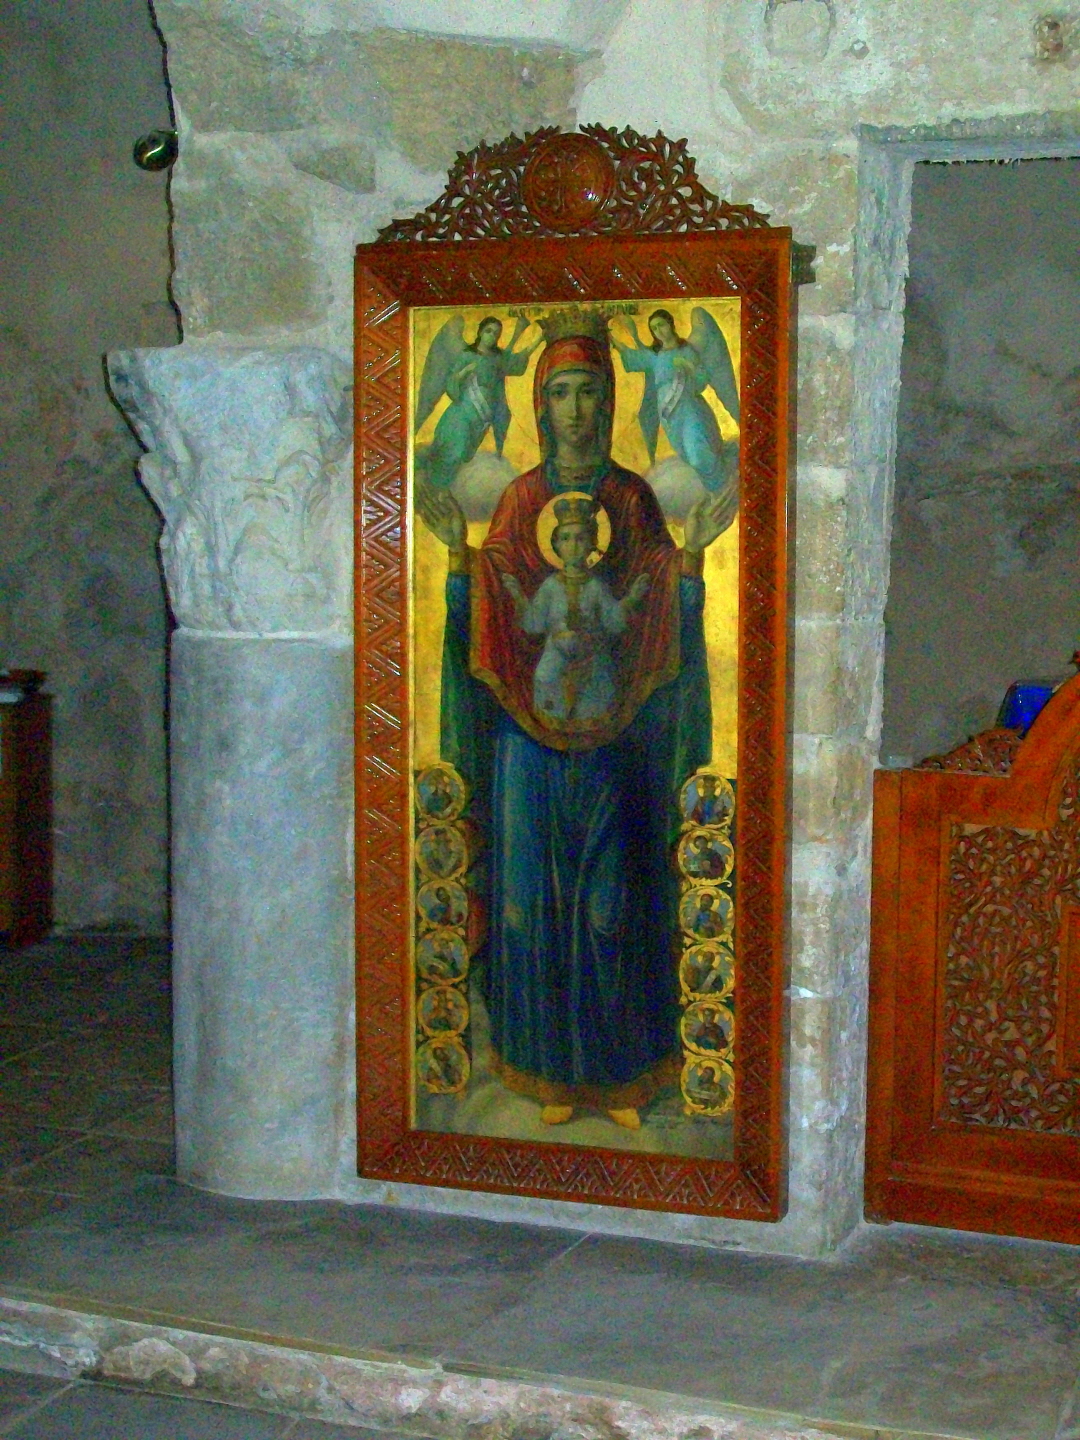 Mother Mary (Mariam) & Jesus (Isa)Ayia Napa Monastery (10th c.) - Ayia Napa, Cyprus